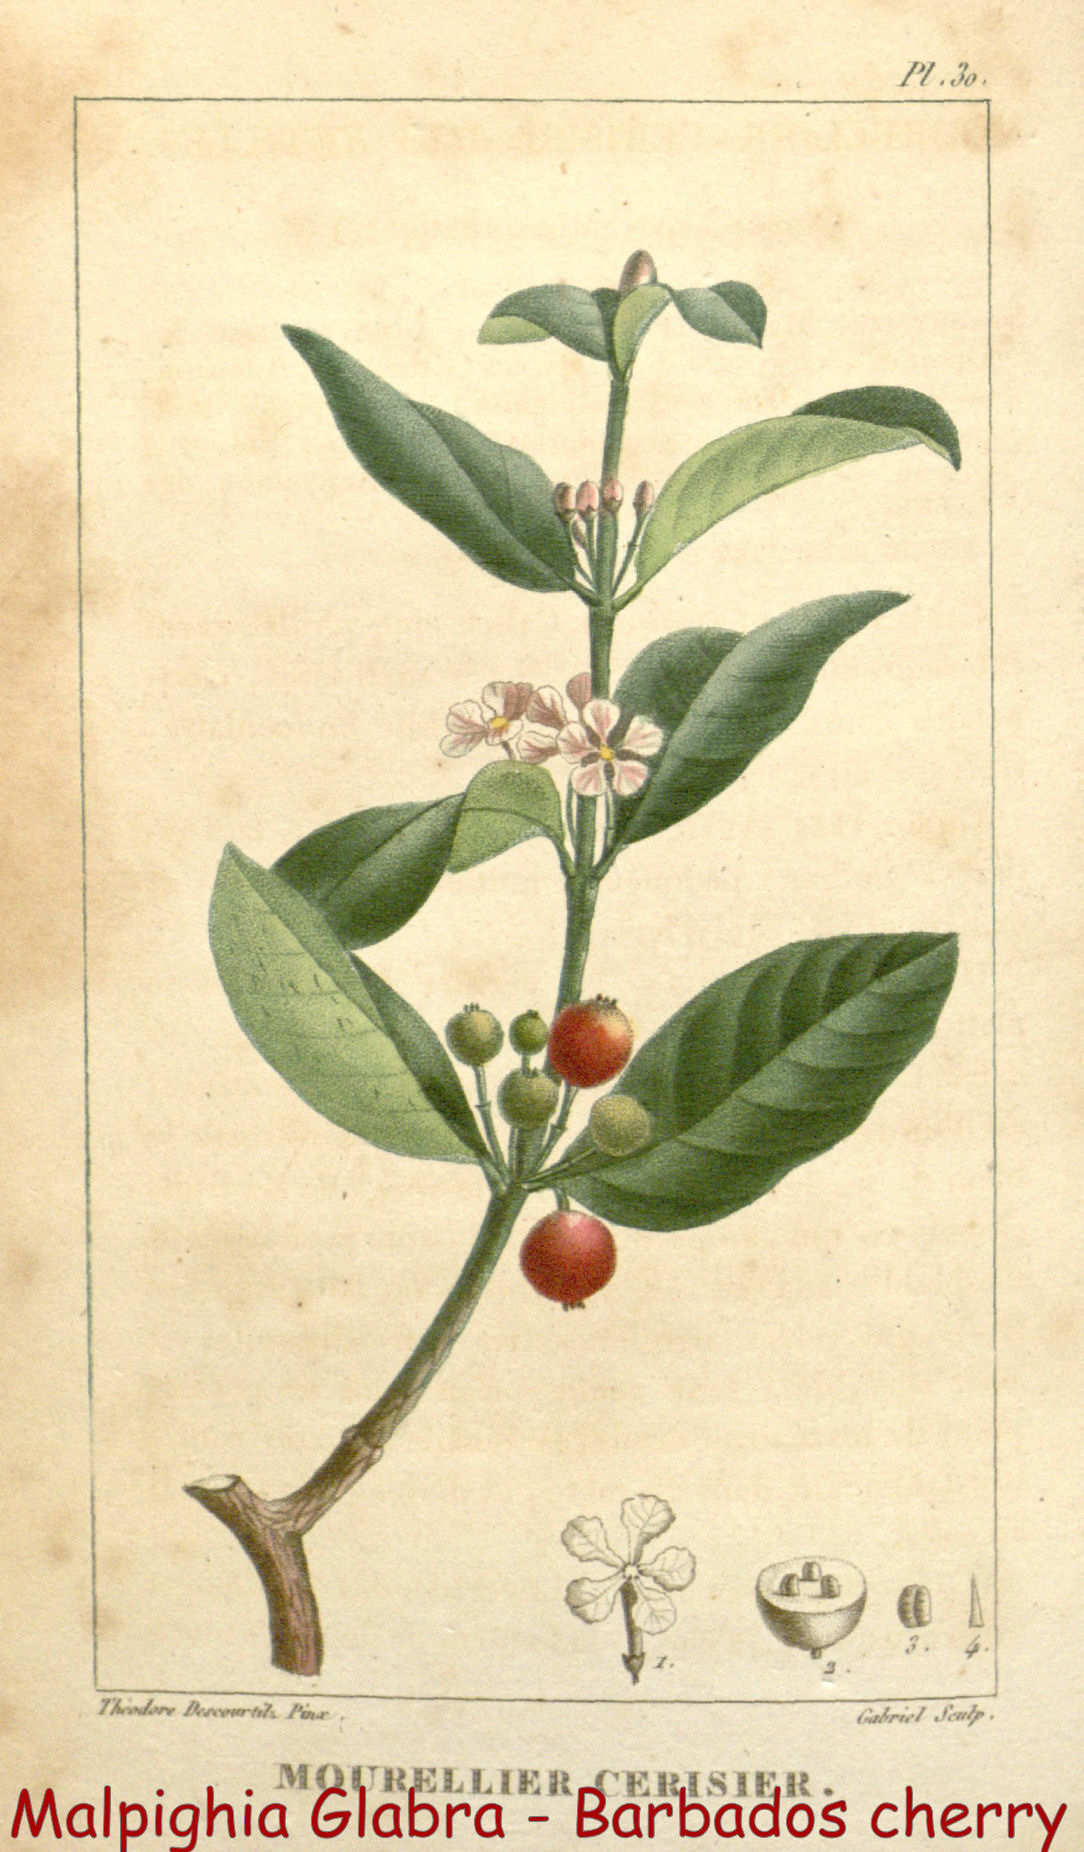 Malpighia glabra - Barbados cherry